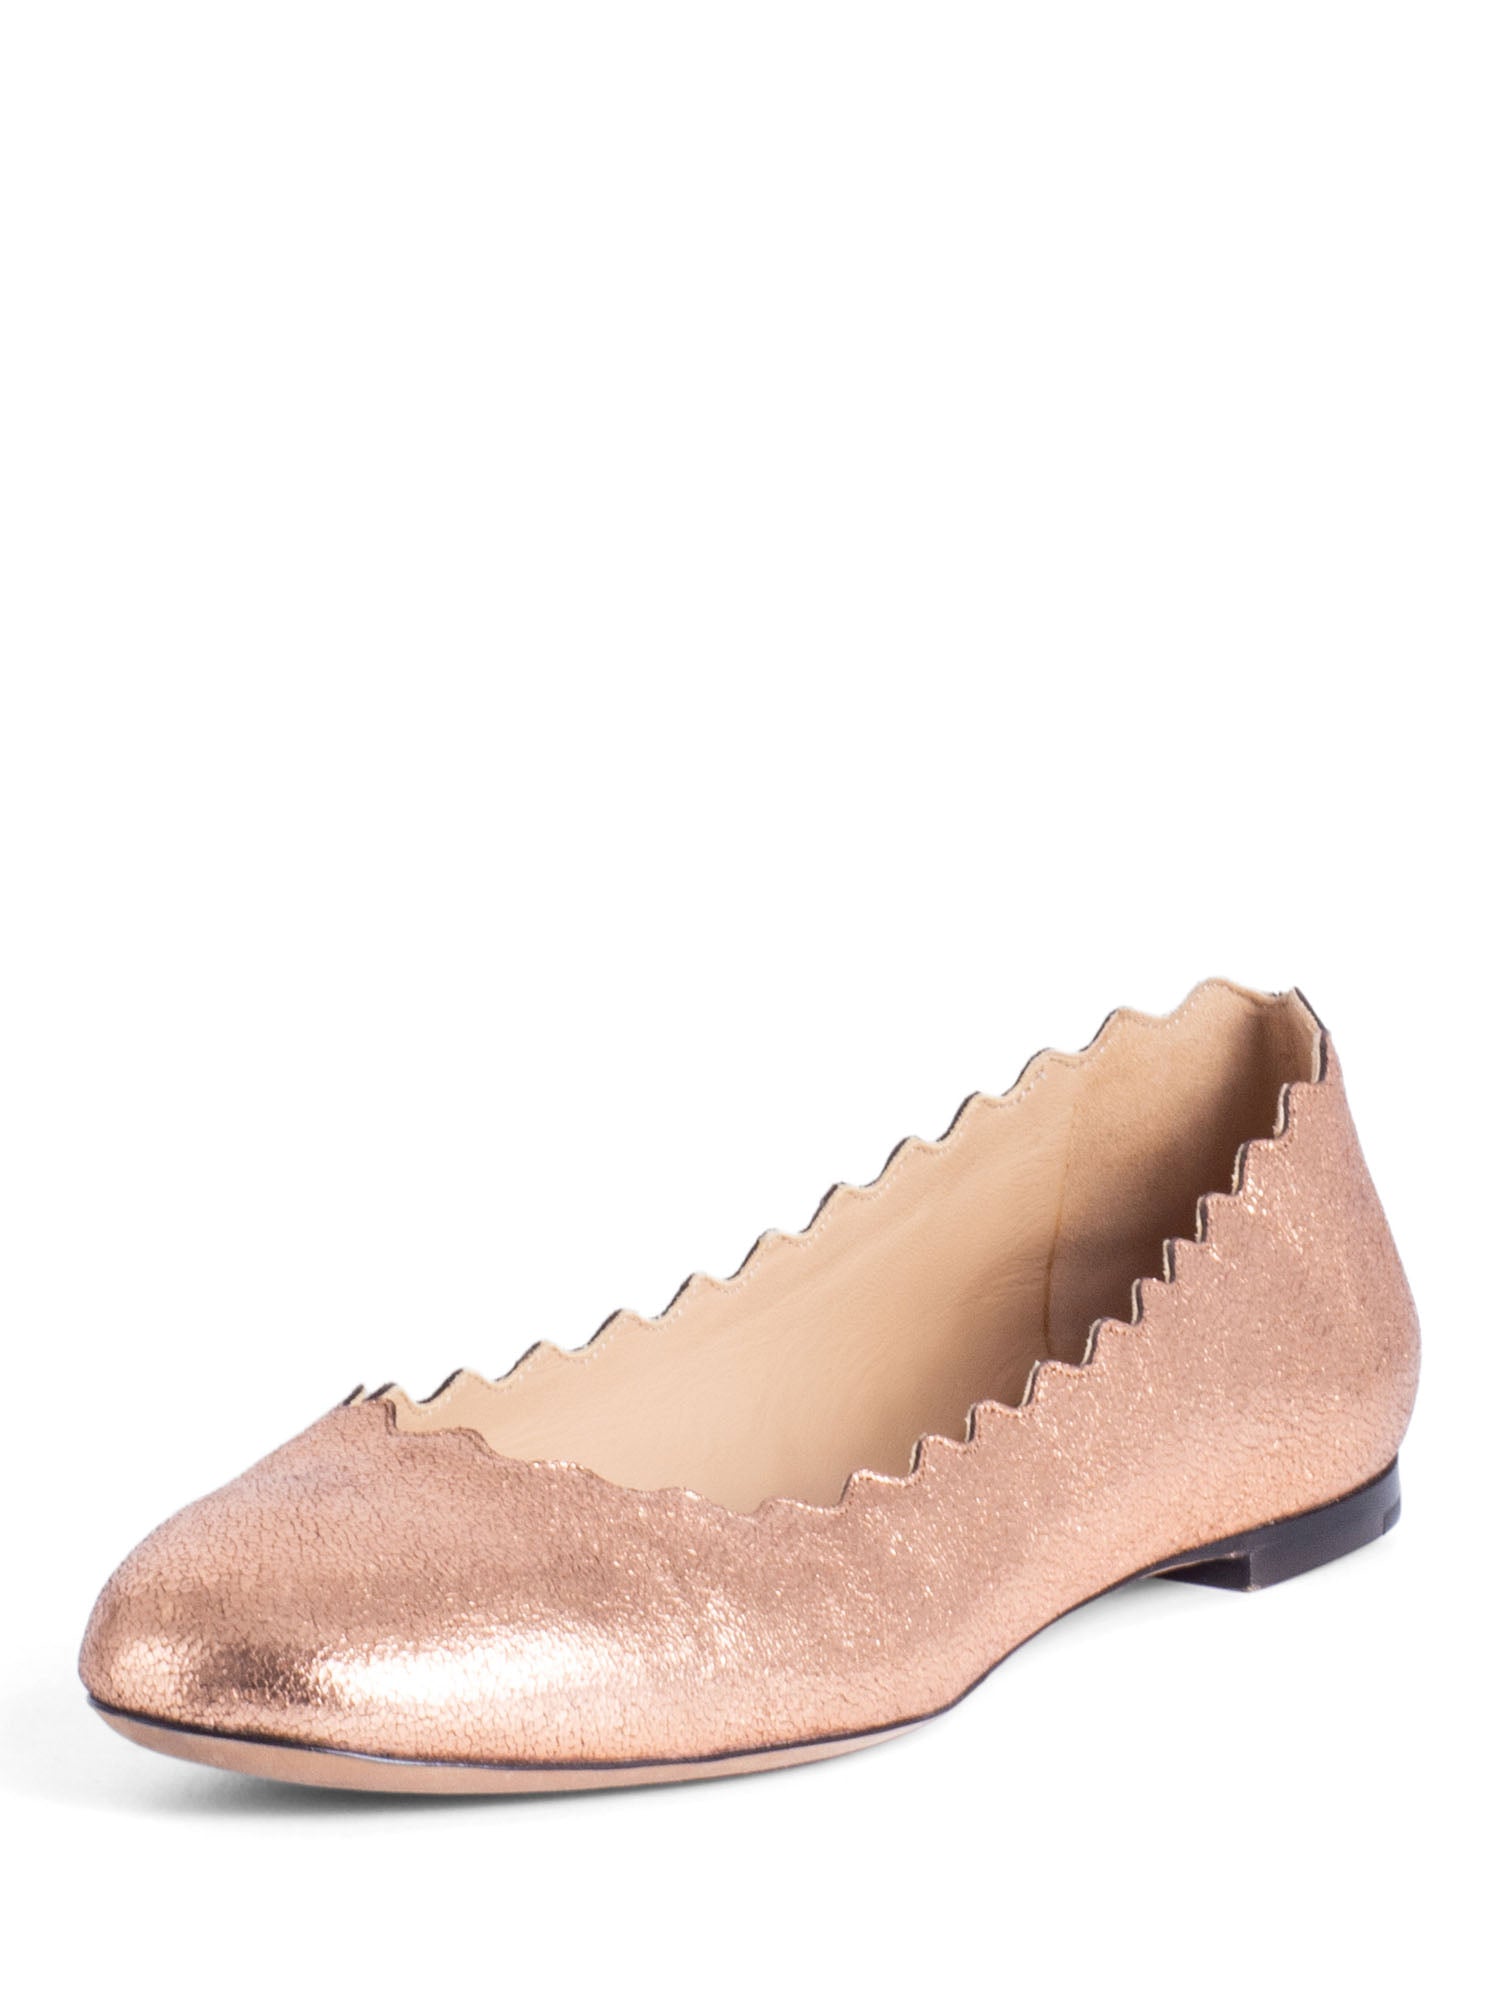 Chloe Metallic Leather Scalloped Ballet Flats Rose Gold-designer resale